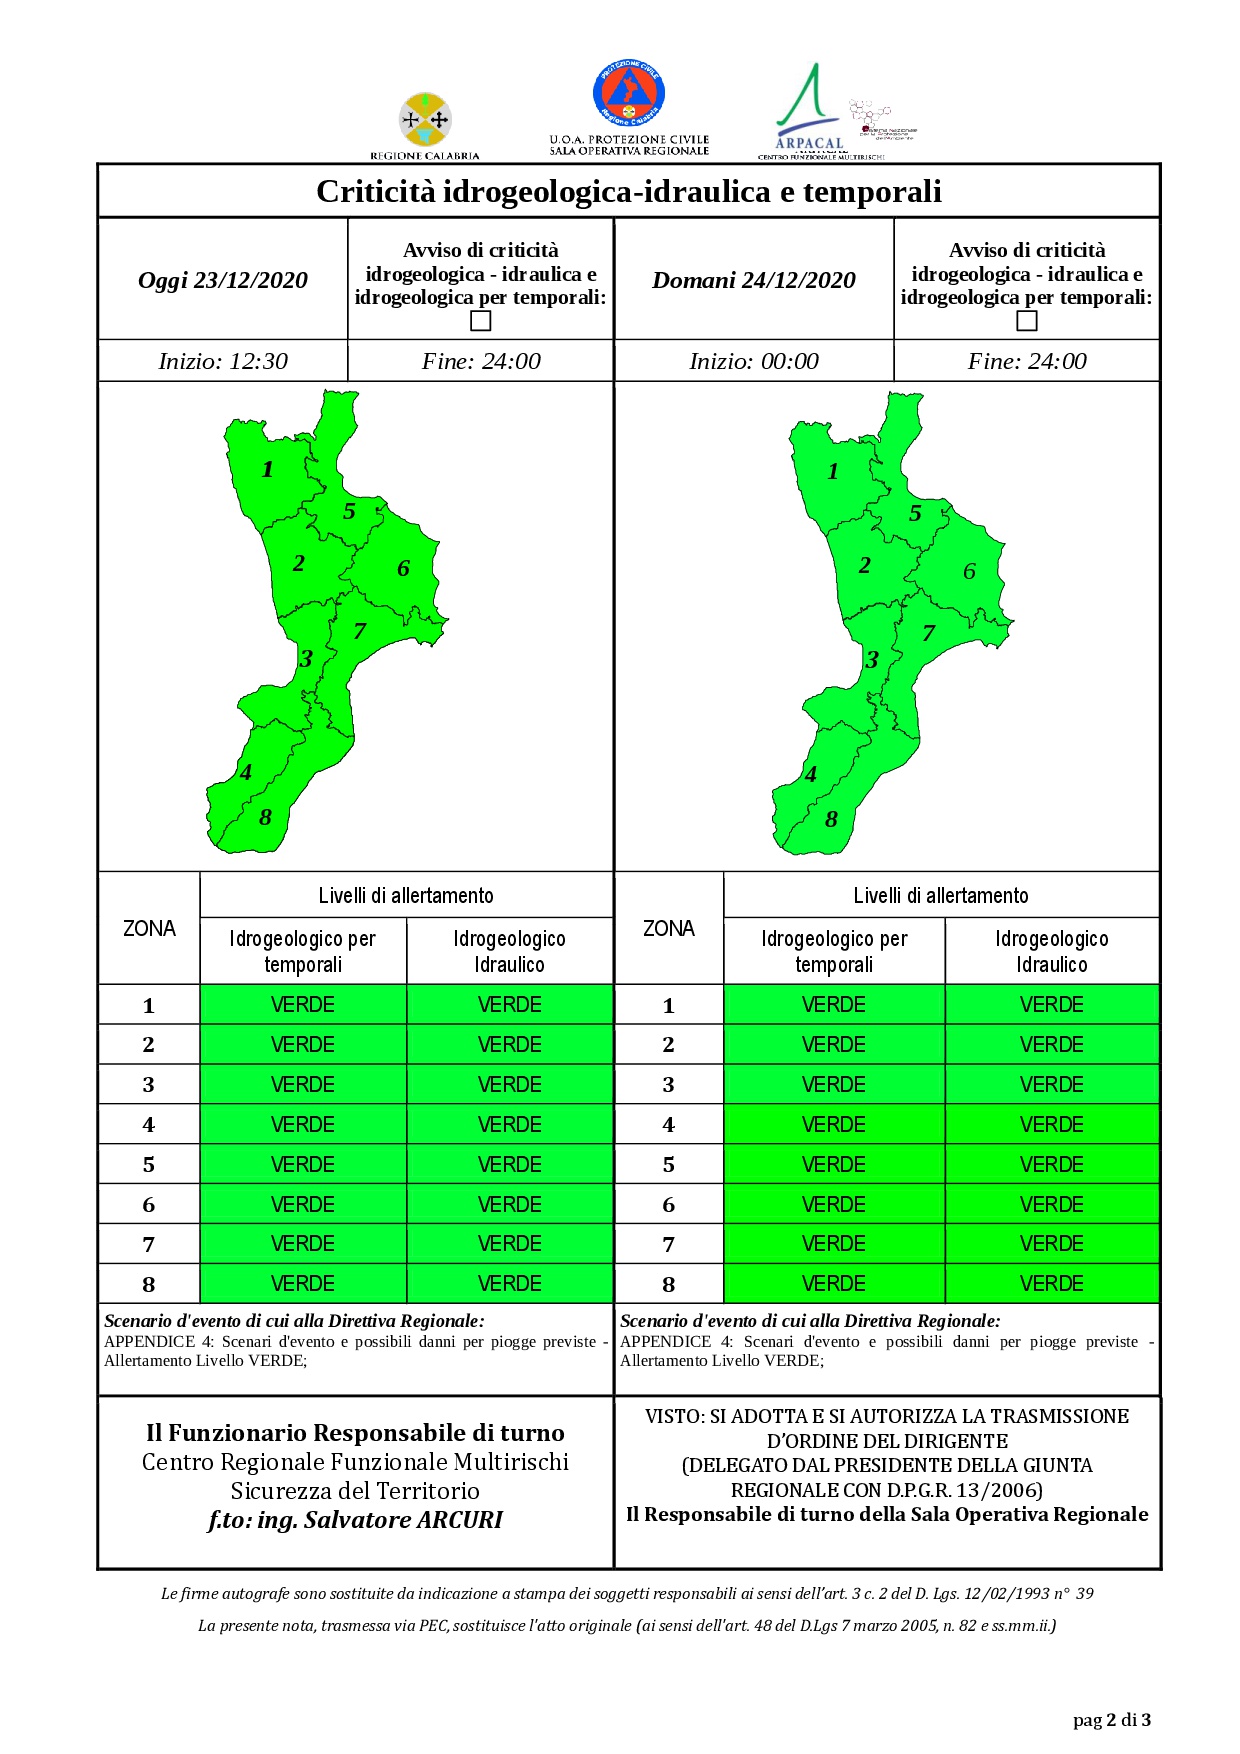 Criticità idrogeologica-idraulica e temporali in Calabria 23-12-2020